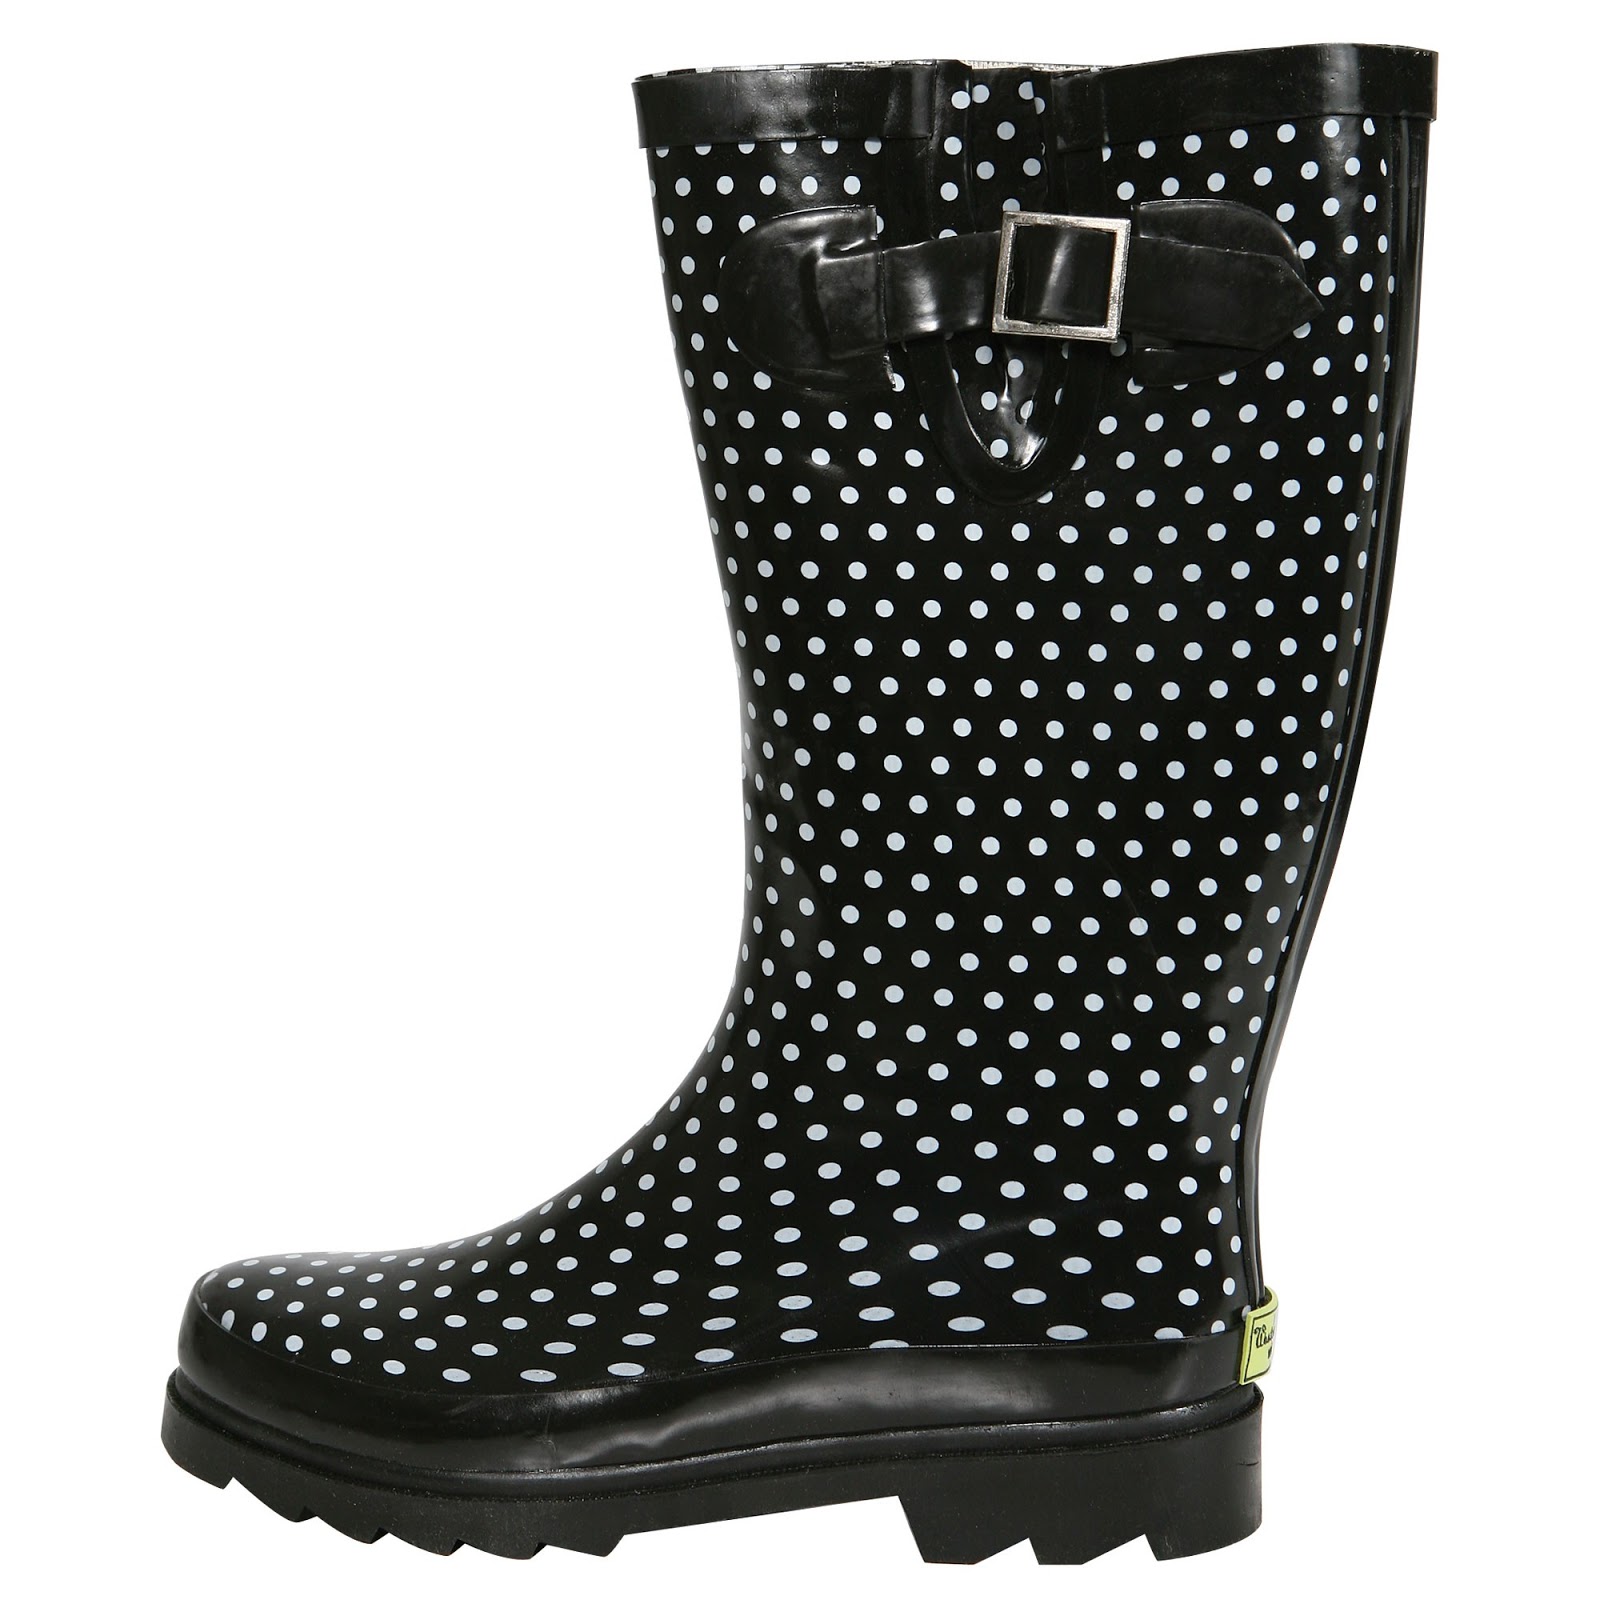 Boots Costume Pic: Rain Boots Polka Dots